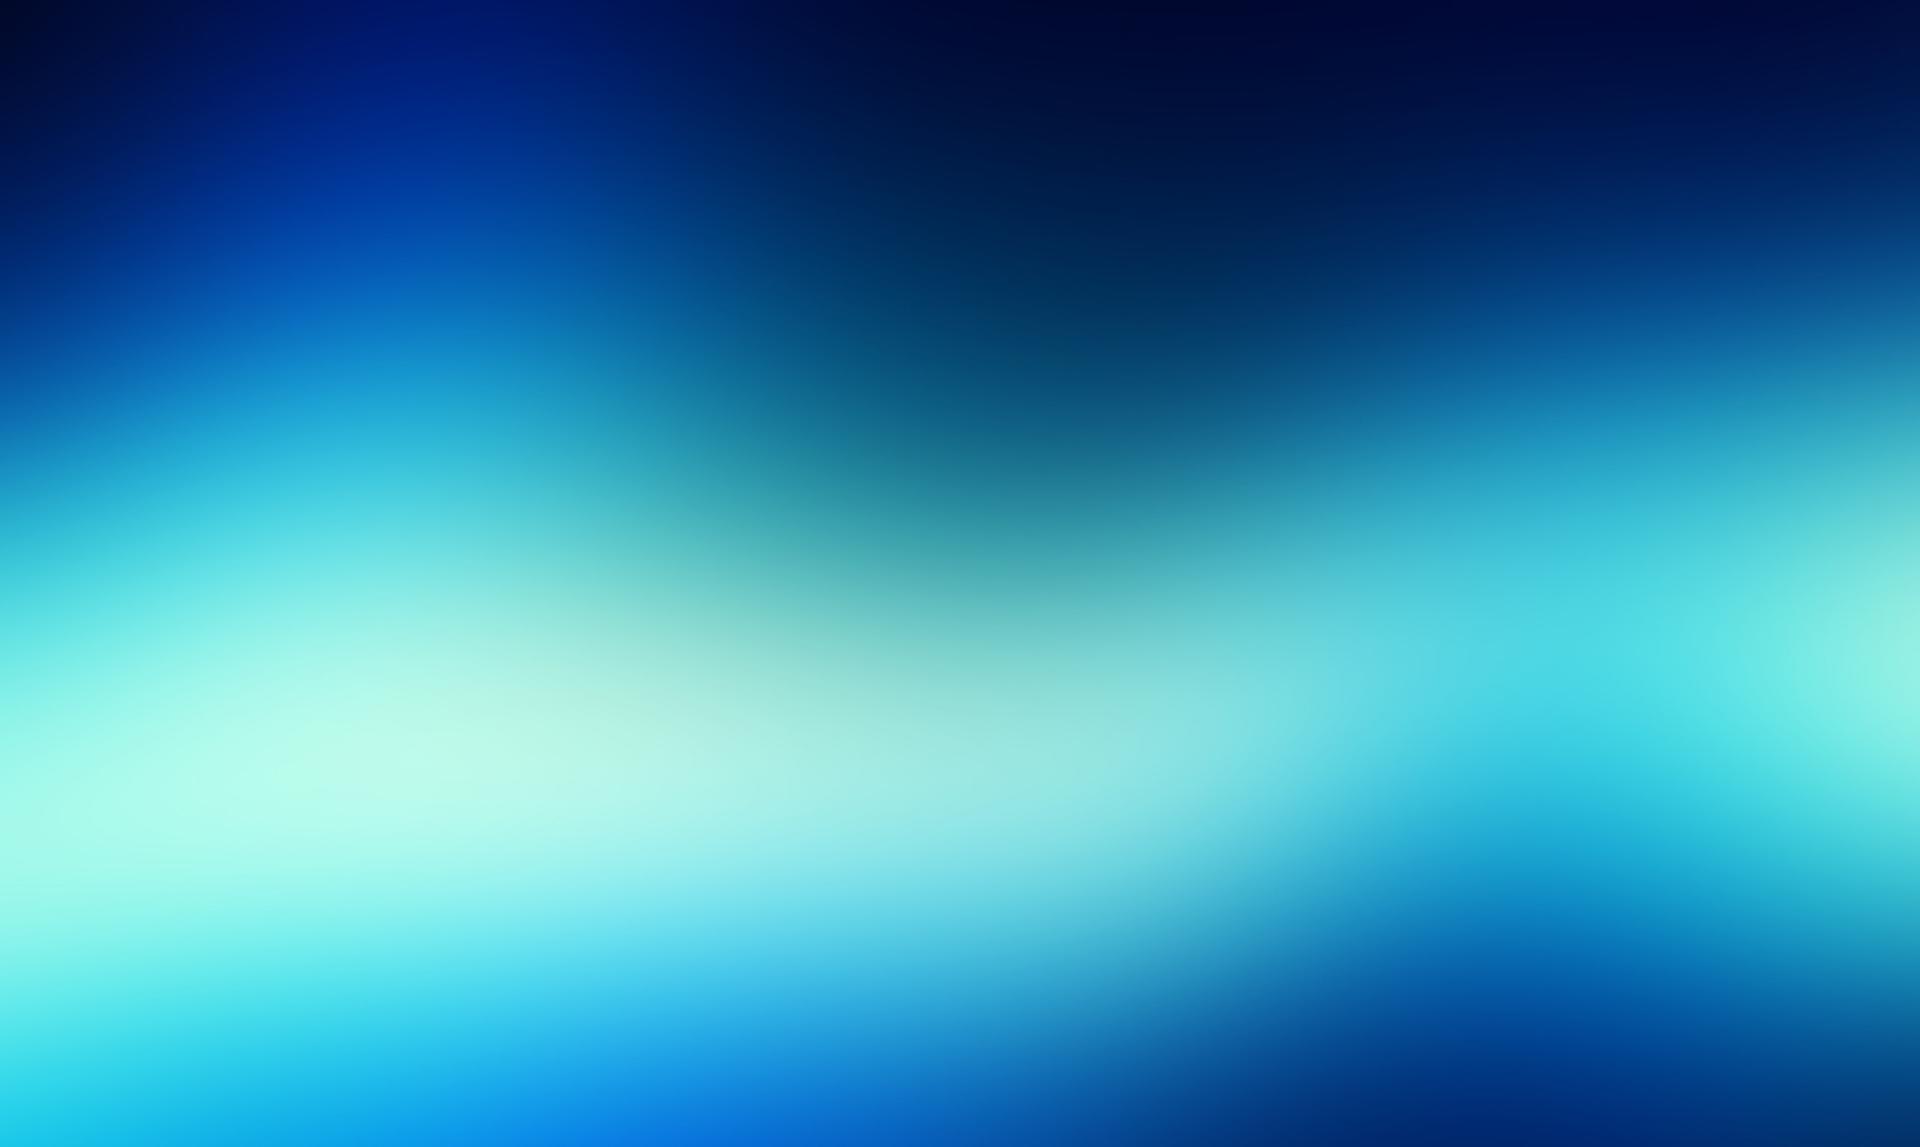 Blue bright blur at 2048 x 2048 iPad size wallpapers HD quality